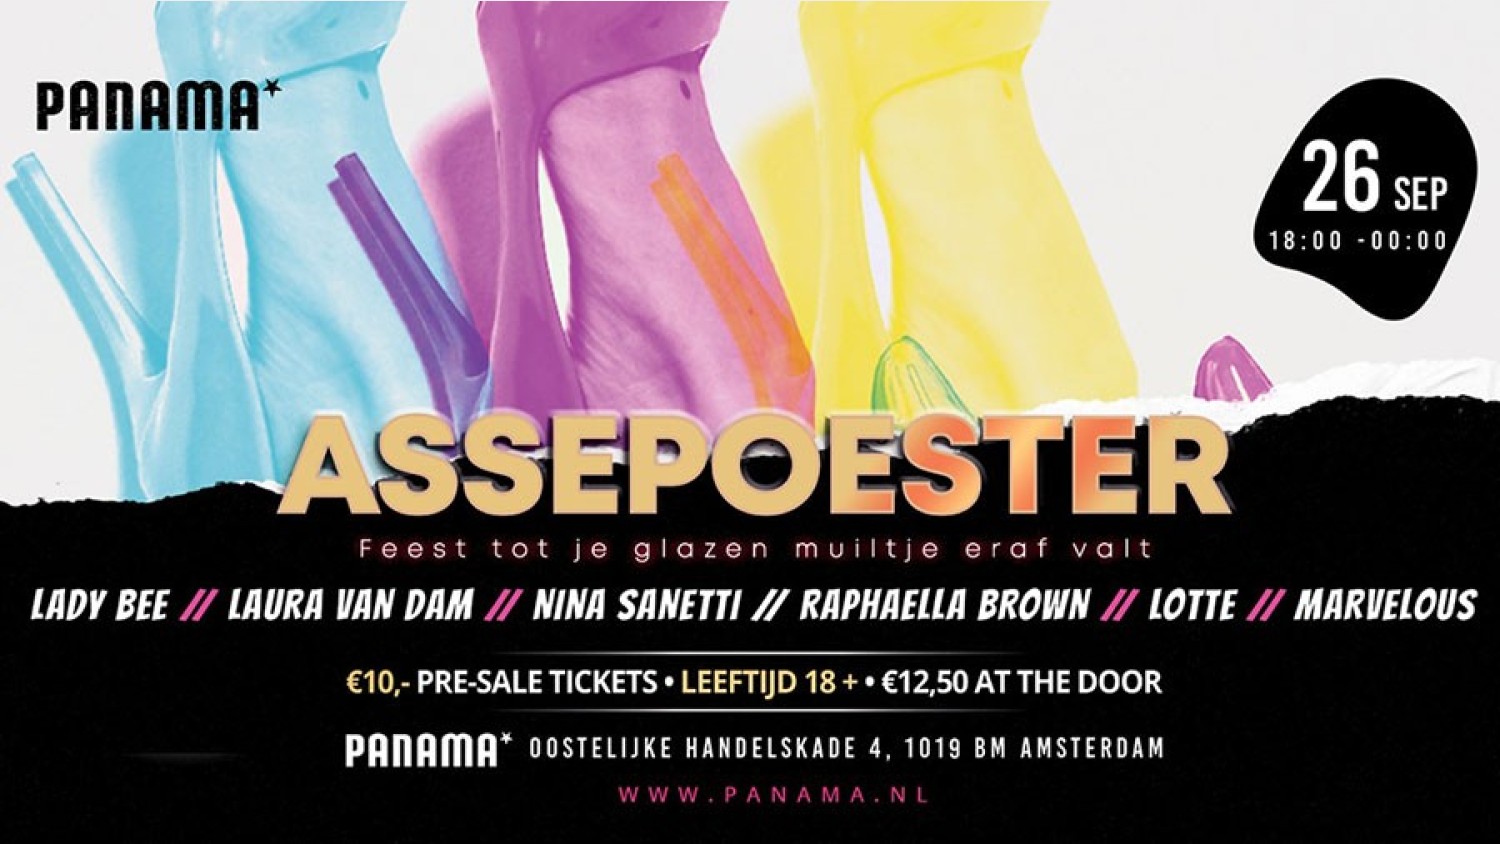 Party nieuws: Assepoester in Club Panama op zondag 26 september